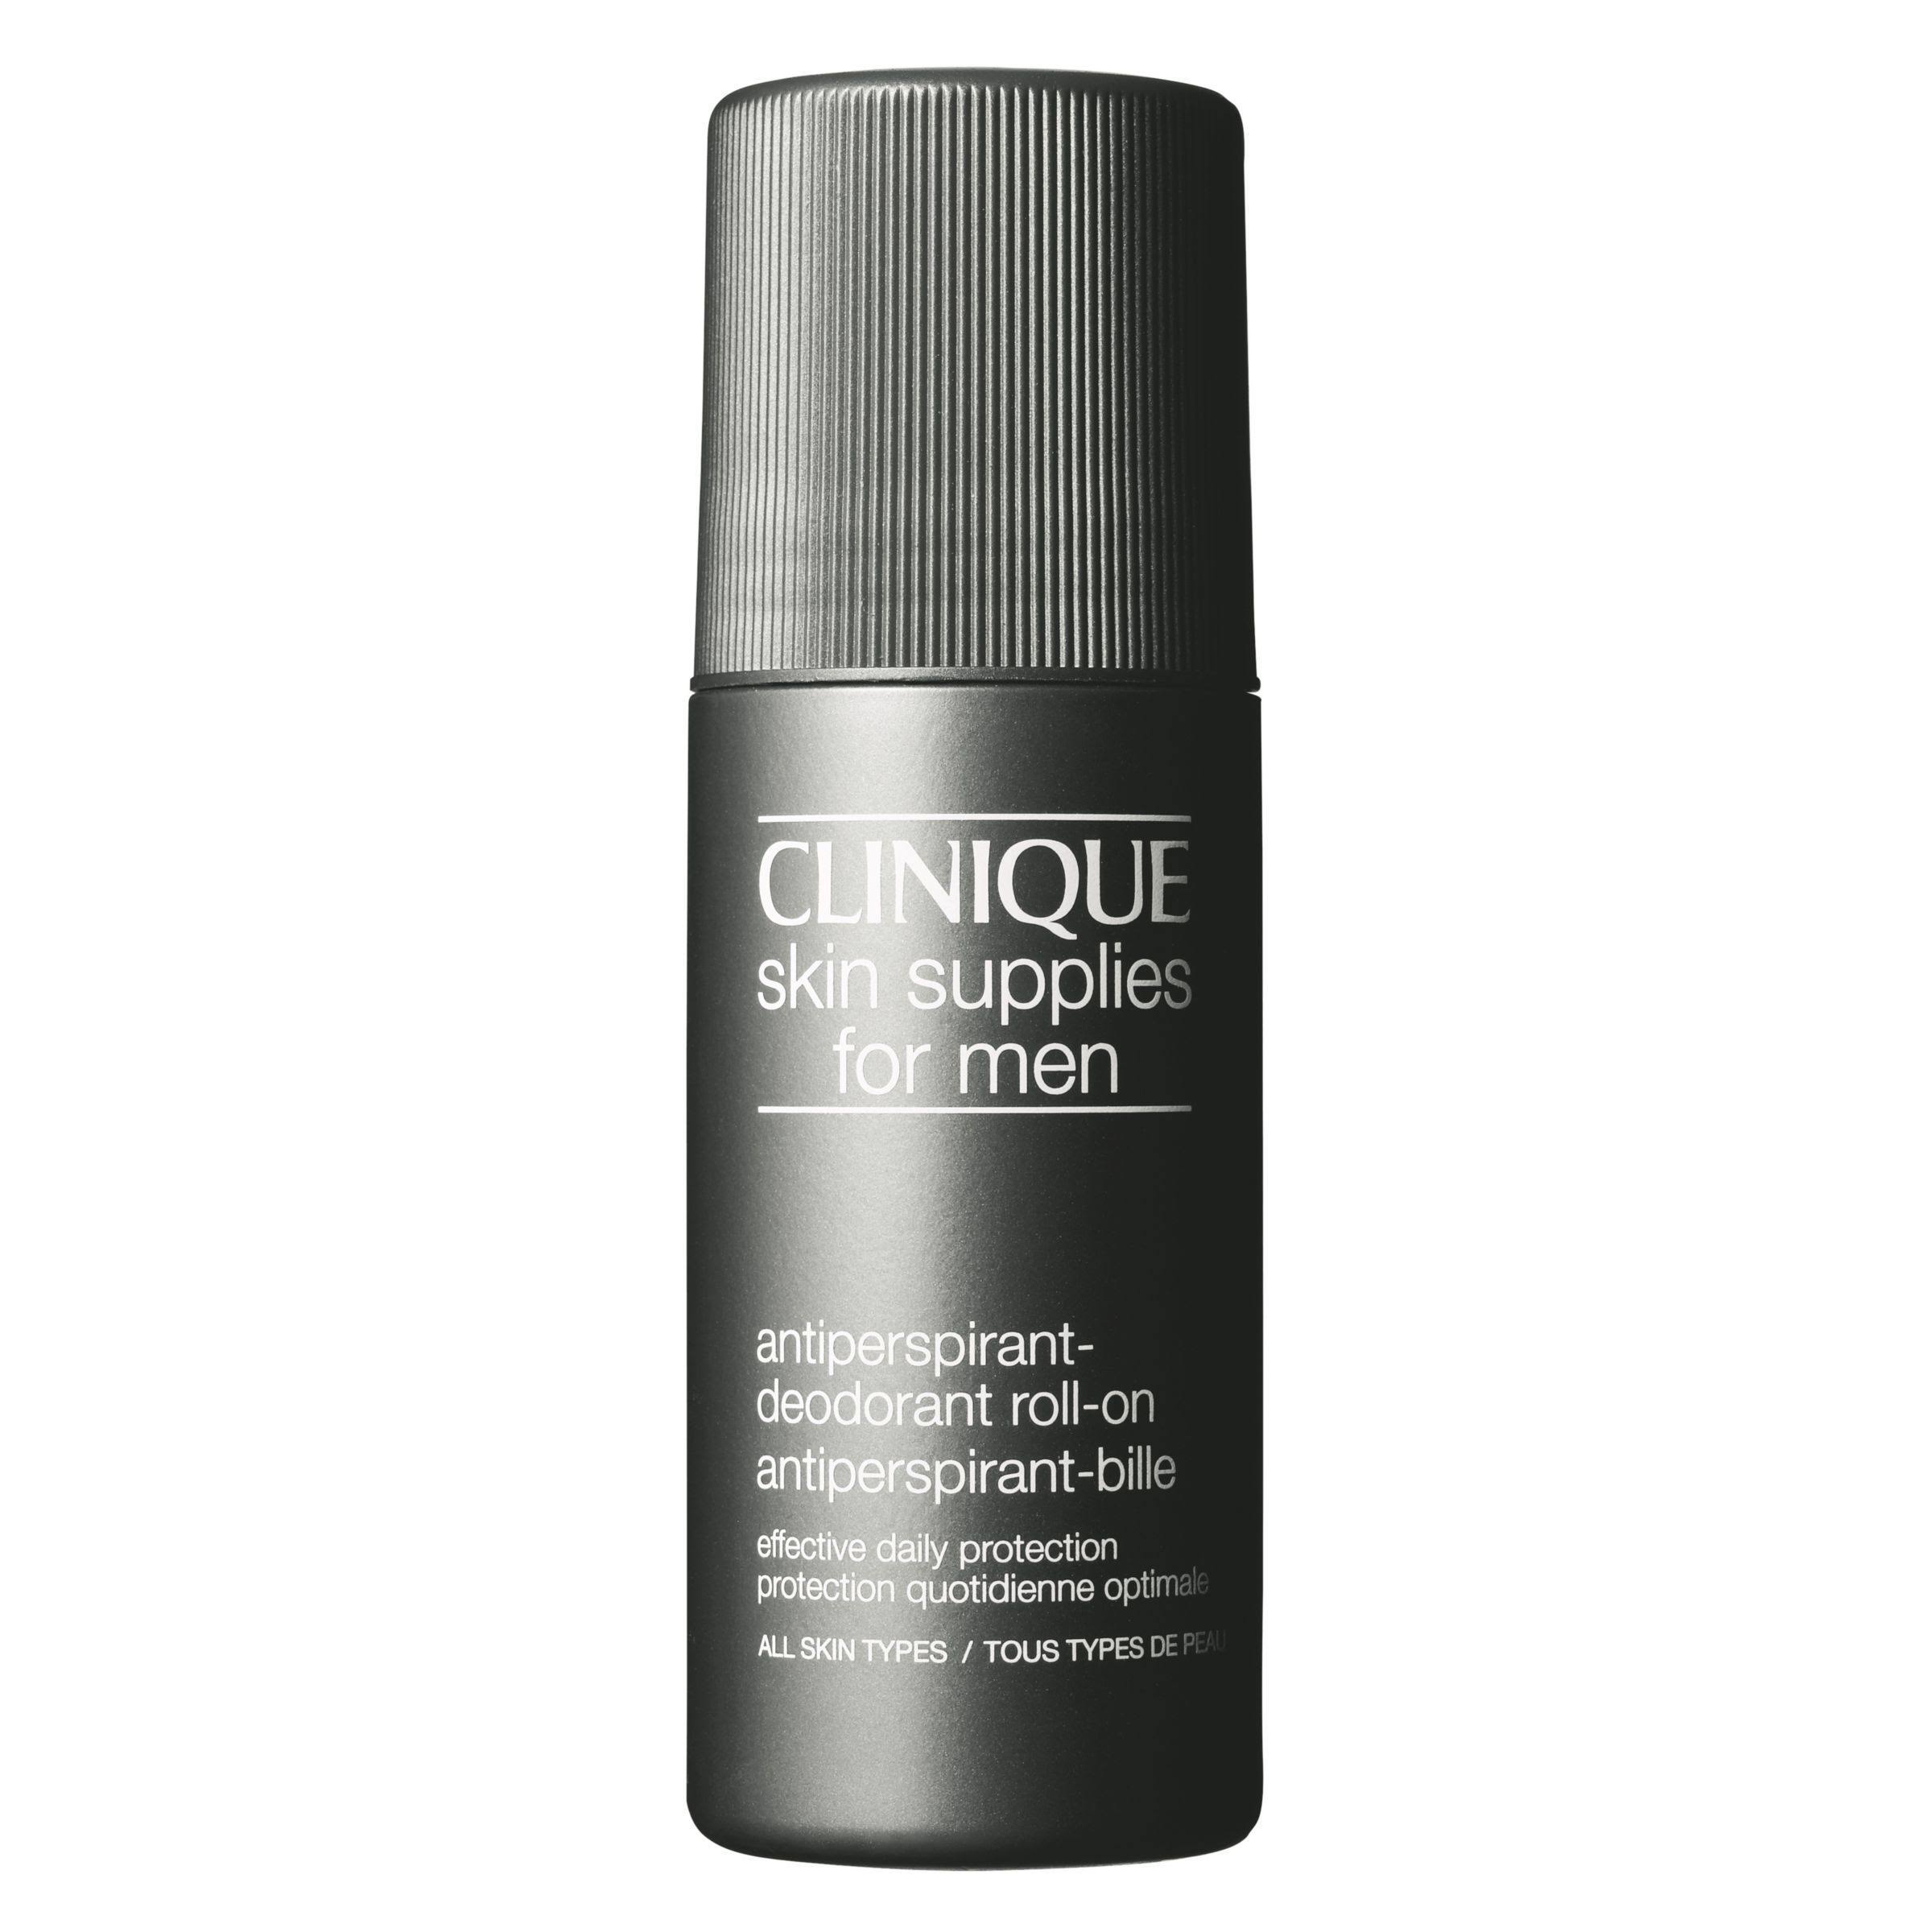 Clinique Skin Supplies for Men Antiperspirant Deodorant Roll-On